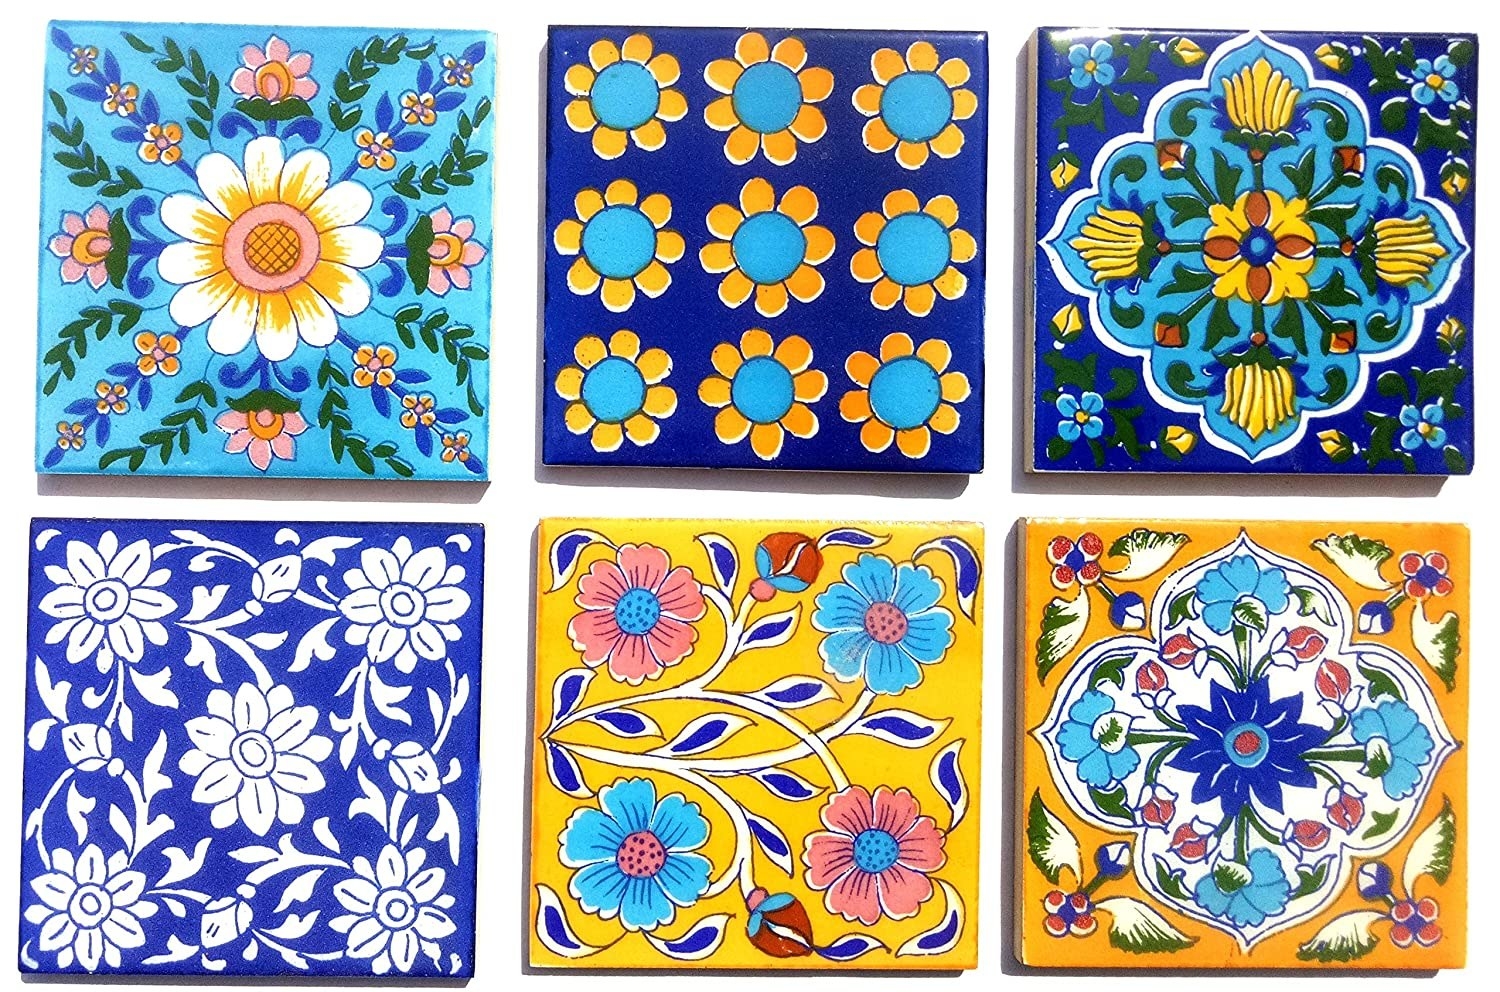 Blue pottery tiles